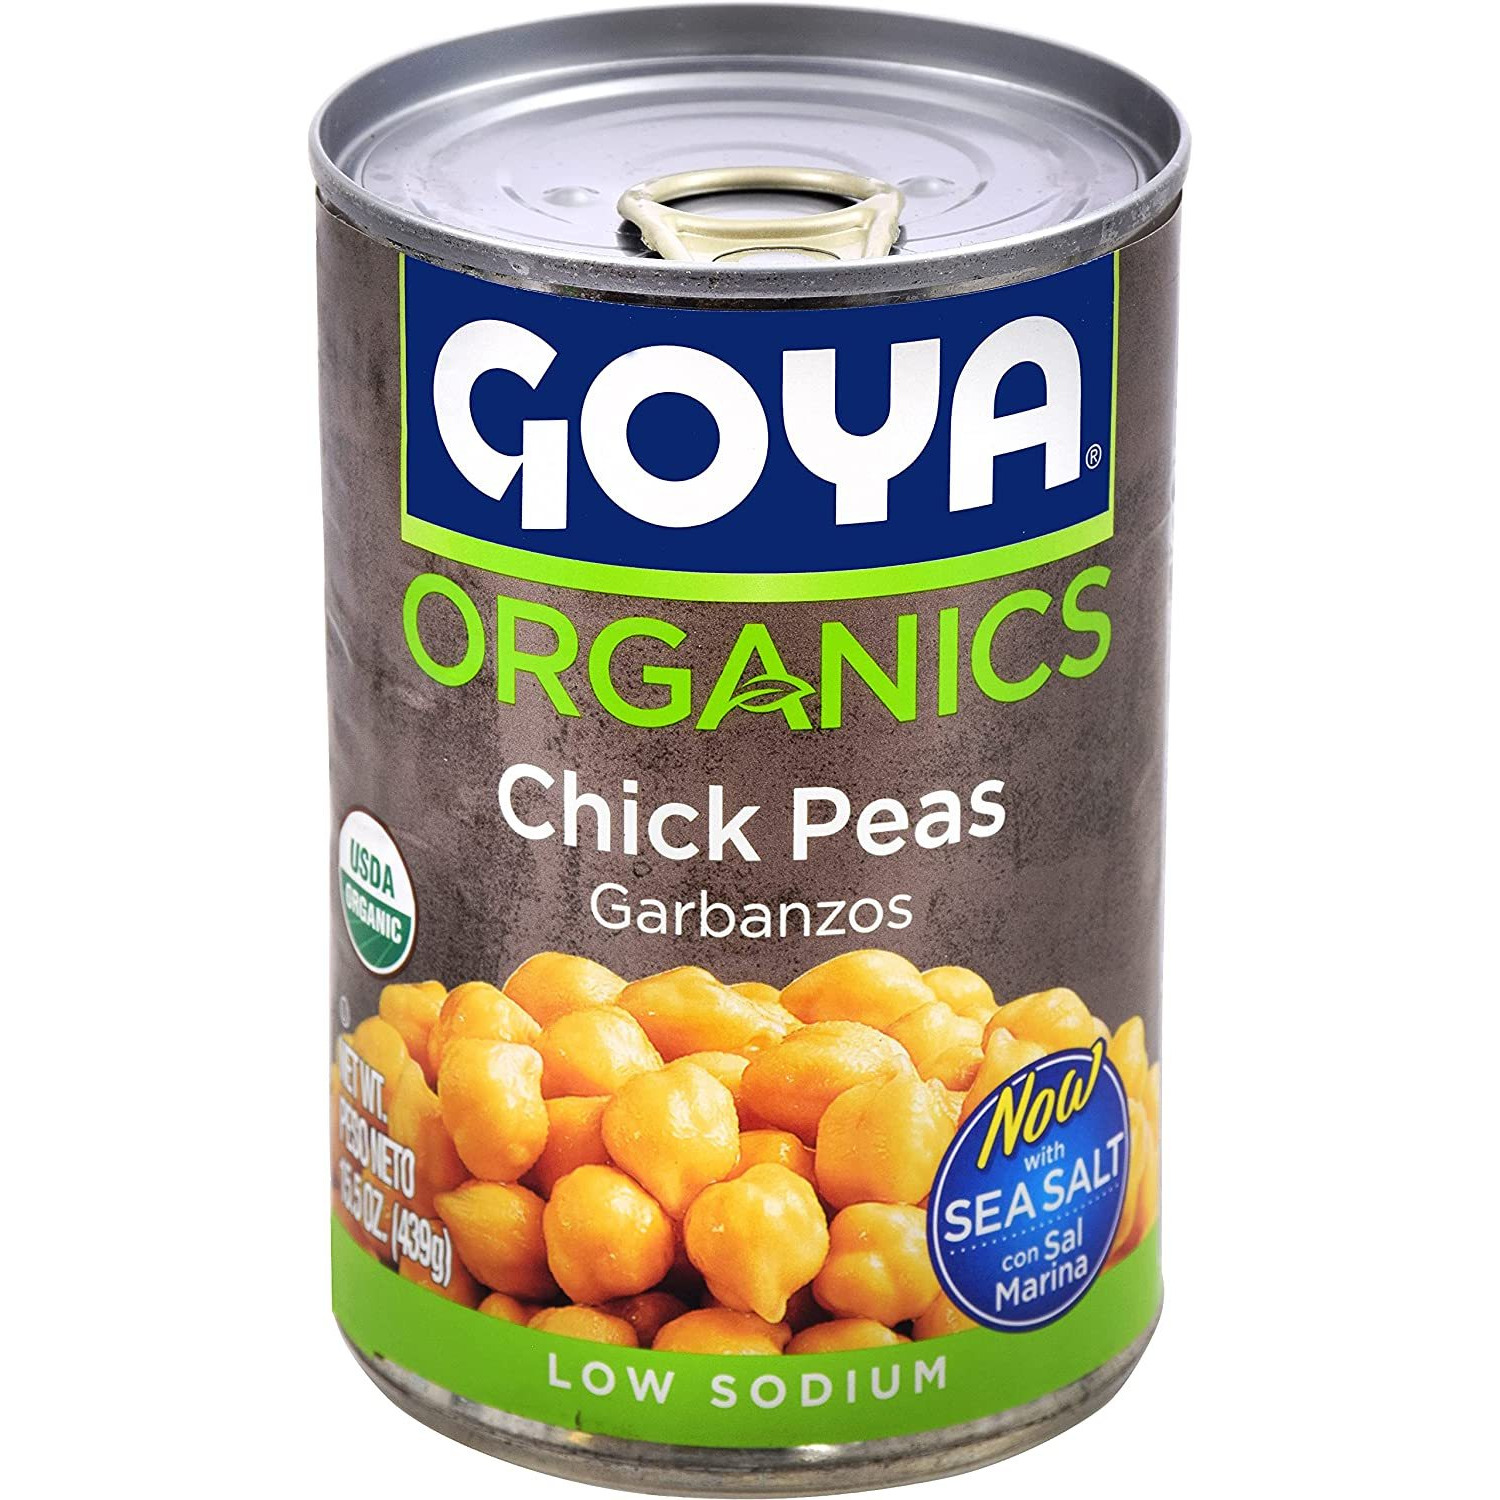 Case of 24 - Goya Organics Chick Peas - 15.5 Oz (439 Gm)